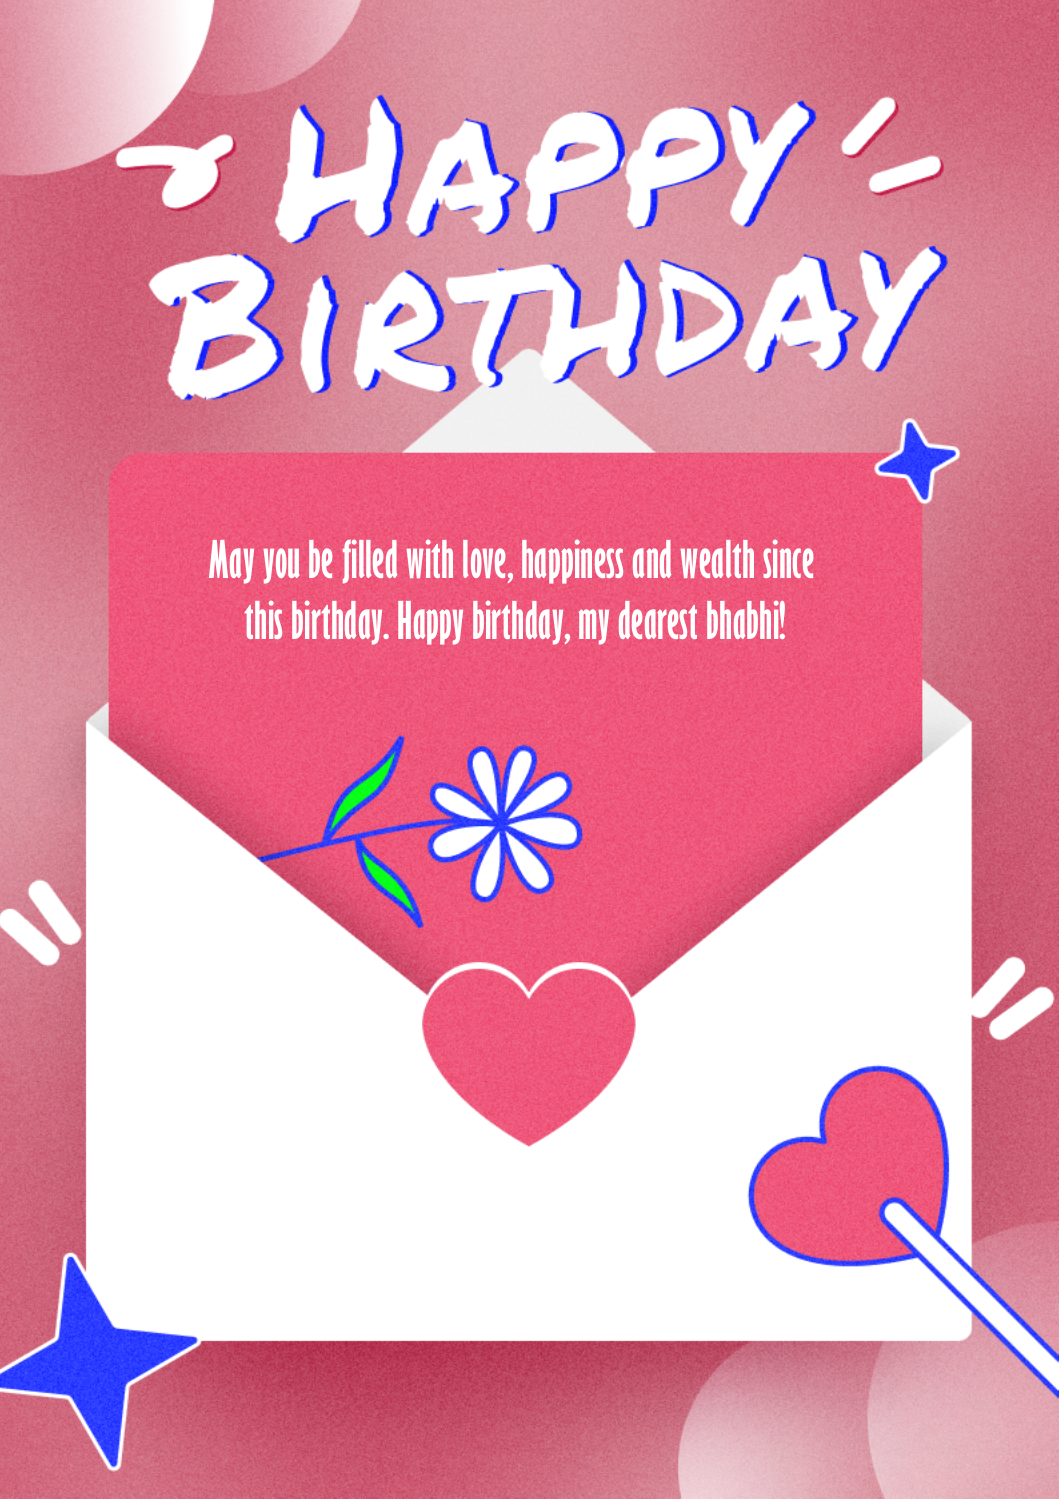 Birthday wishes for bhabhi card 1